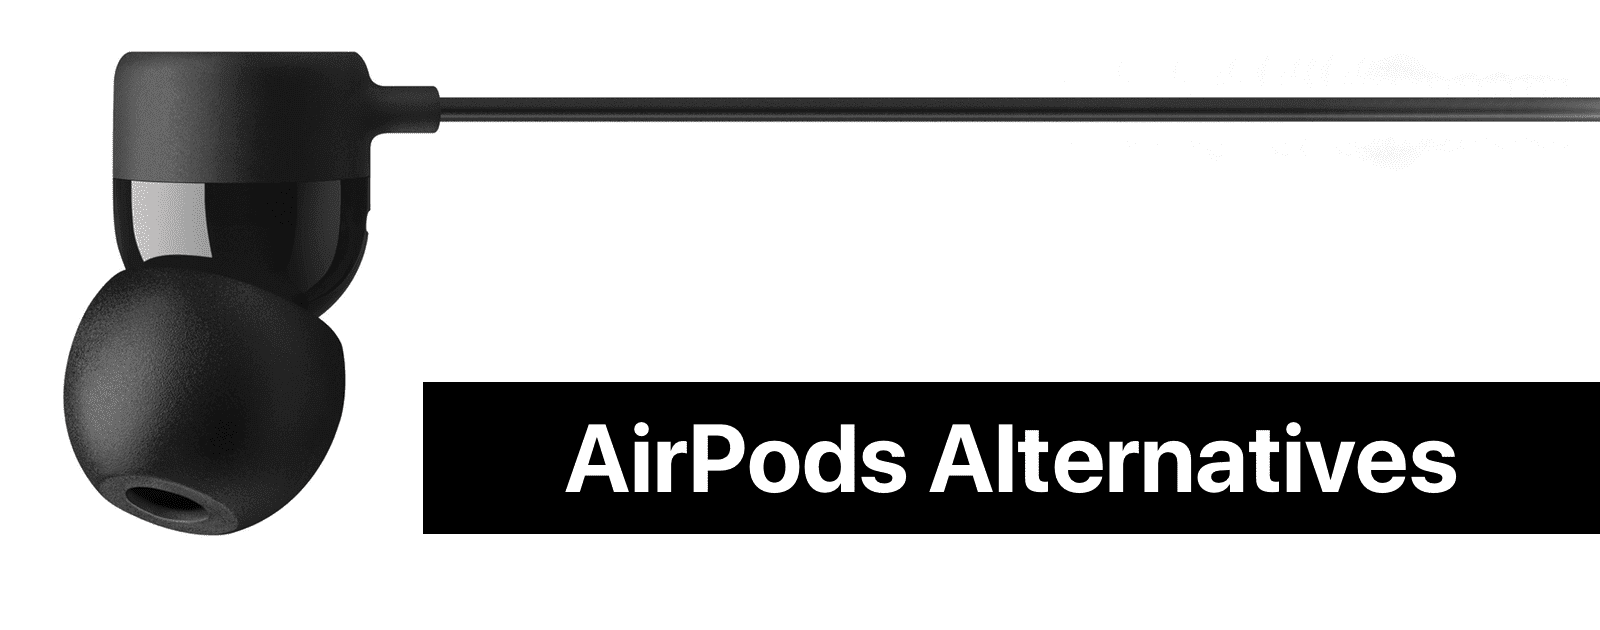 5 AirPods Alternatives to Listen to Music Wirelessly